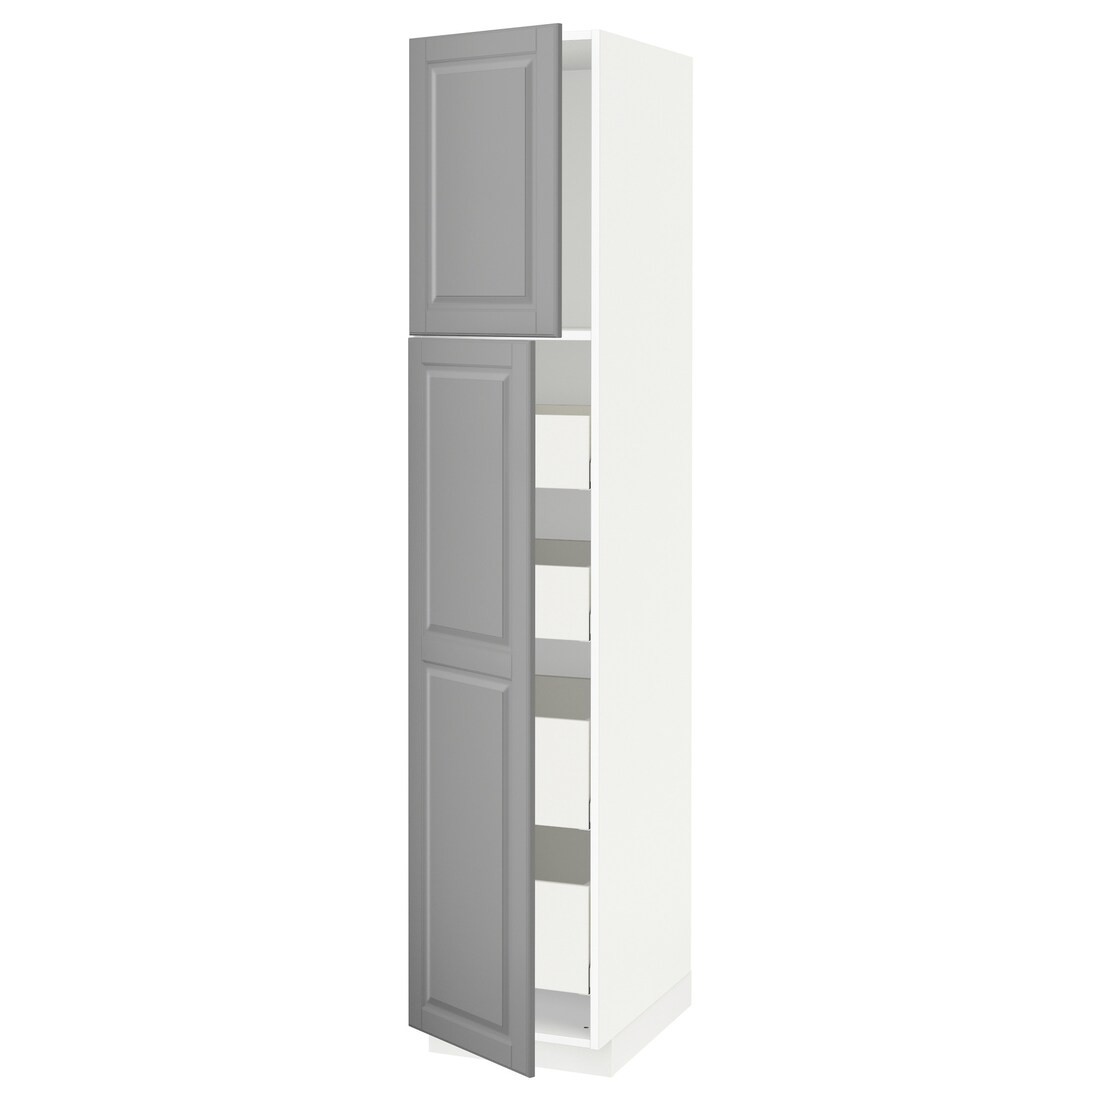 METOD МЕТОД / MAXIMERA МАКСИМЕРА Шкаф высокий 2 двери / 4 ящика, белый / Bodbyn серый, 40x60x200 см